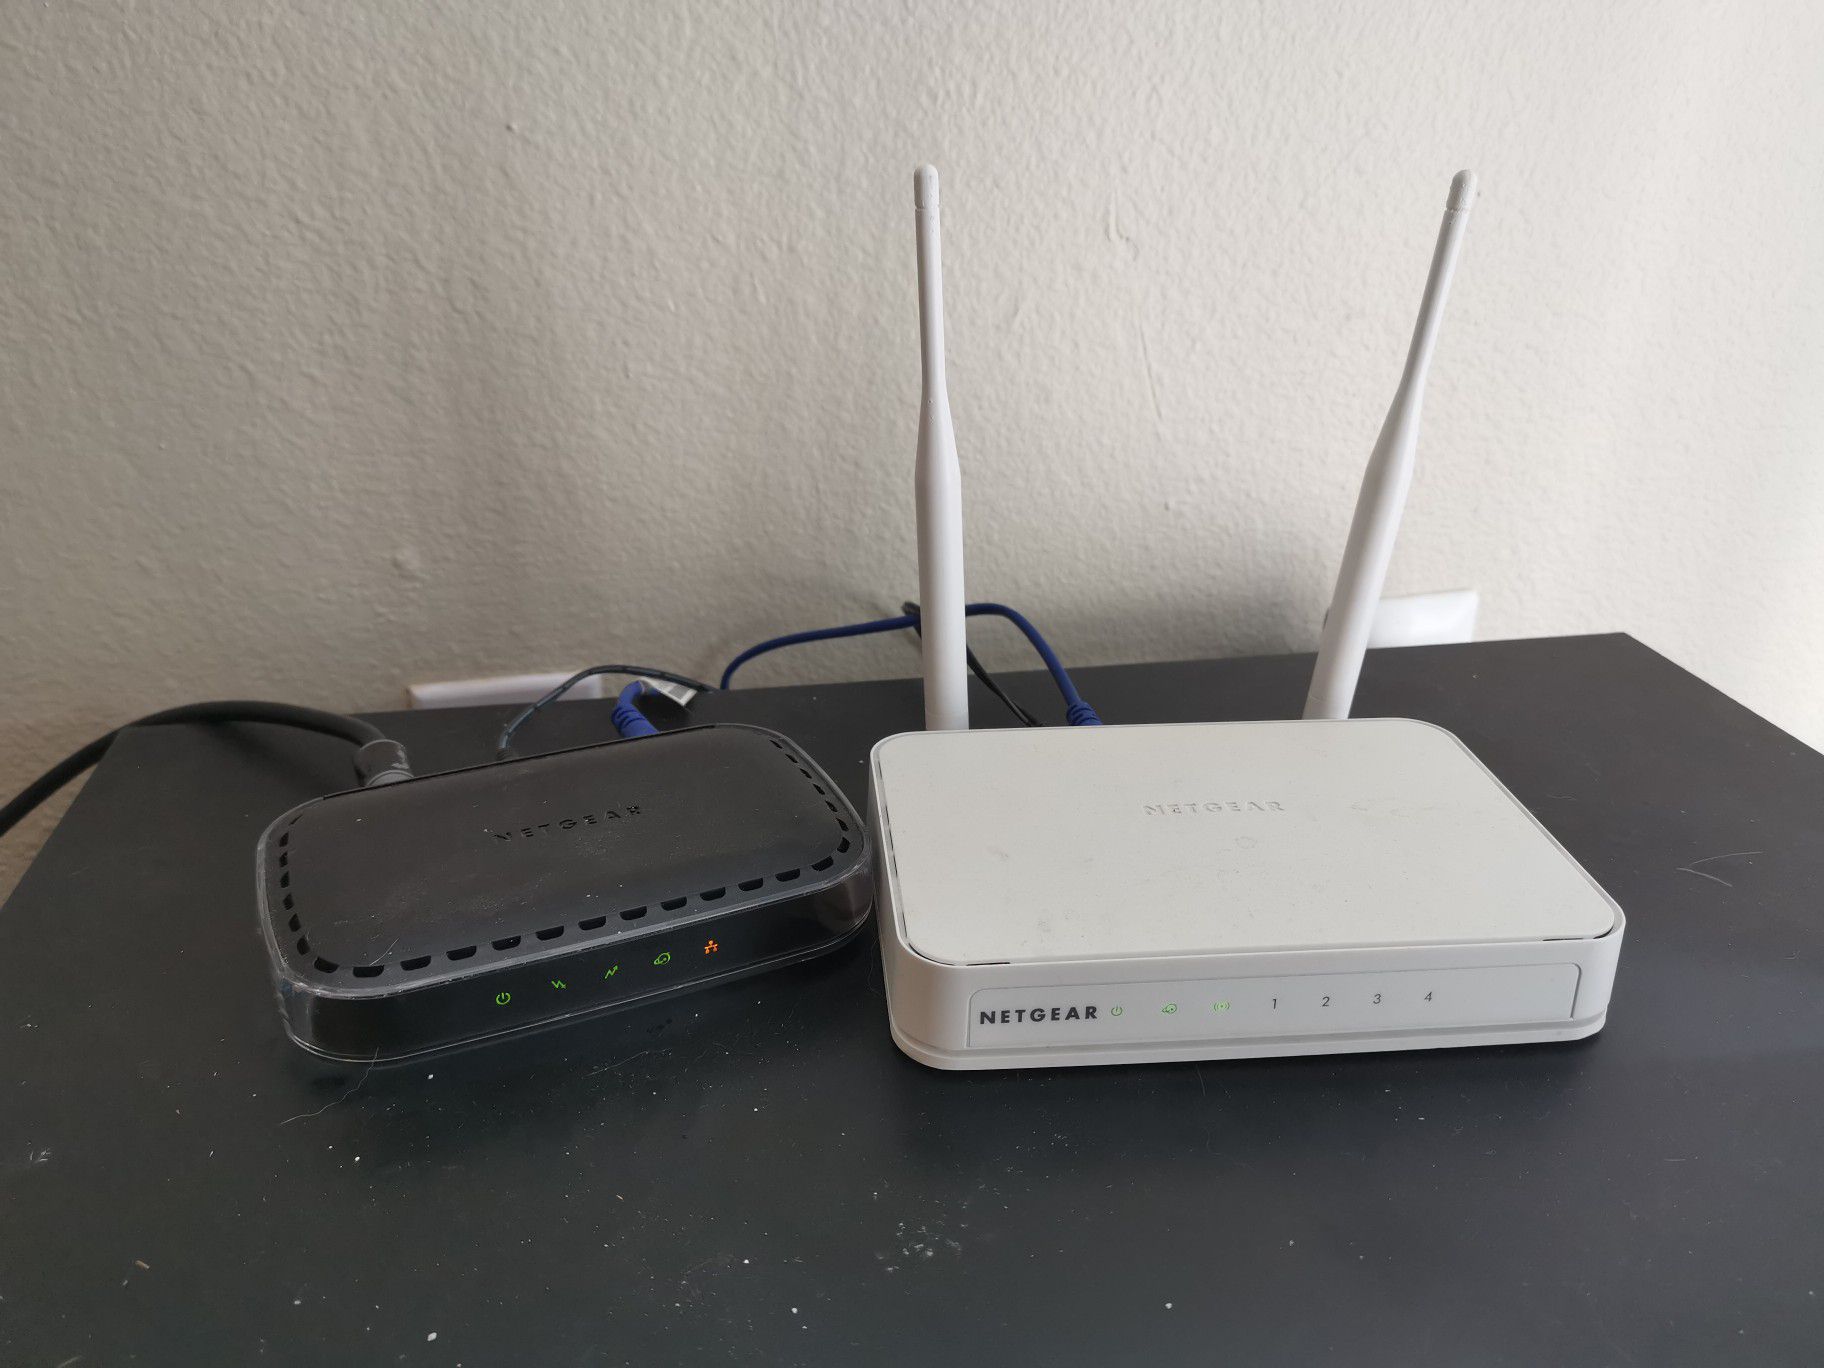 Netgear cable modem & wifi router